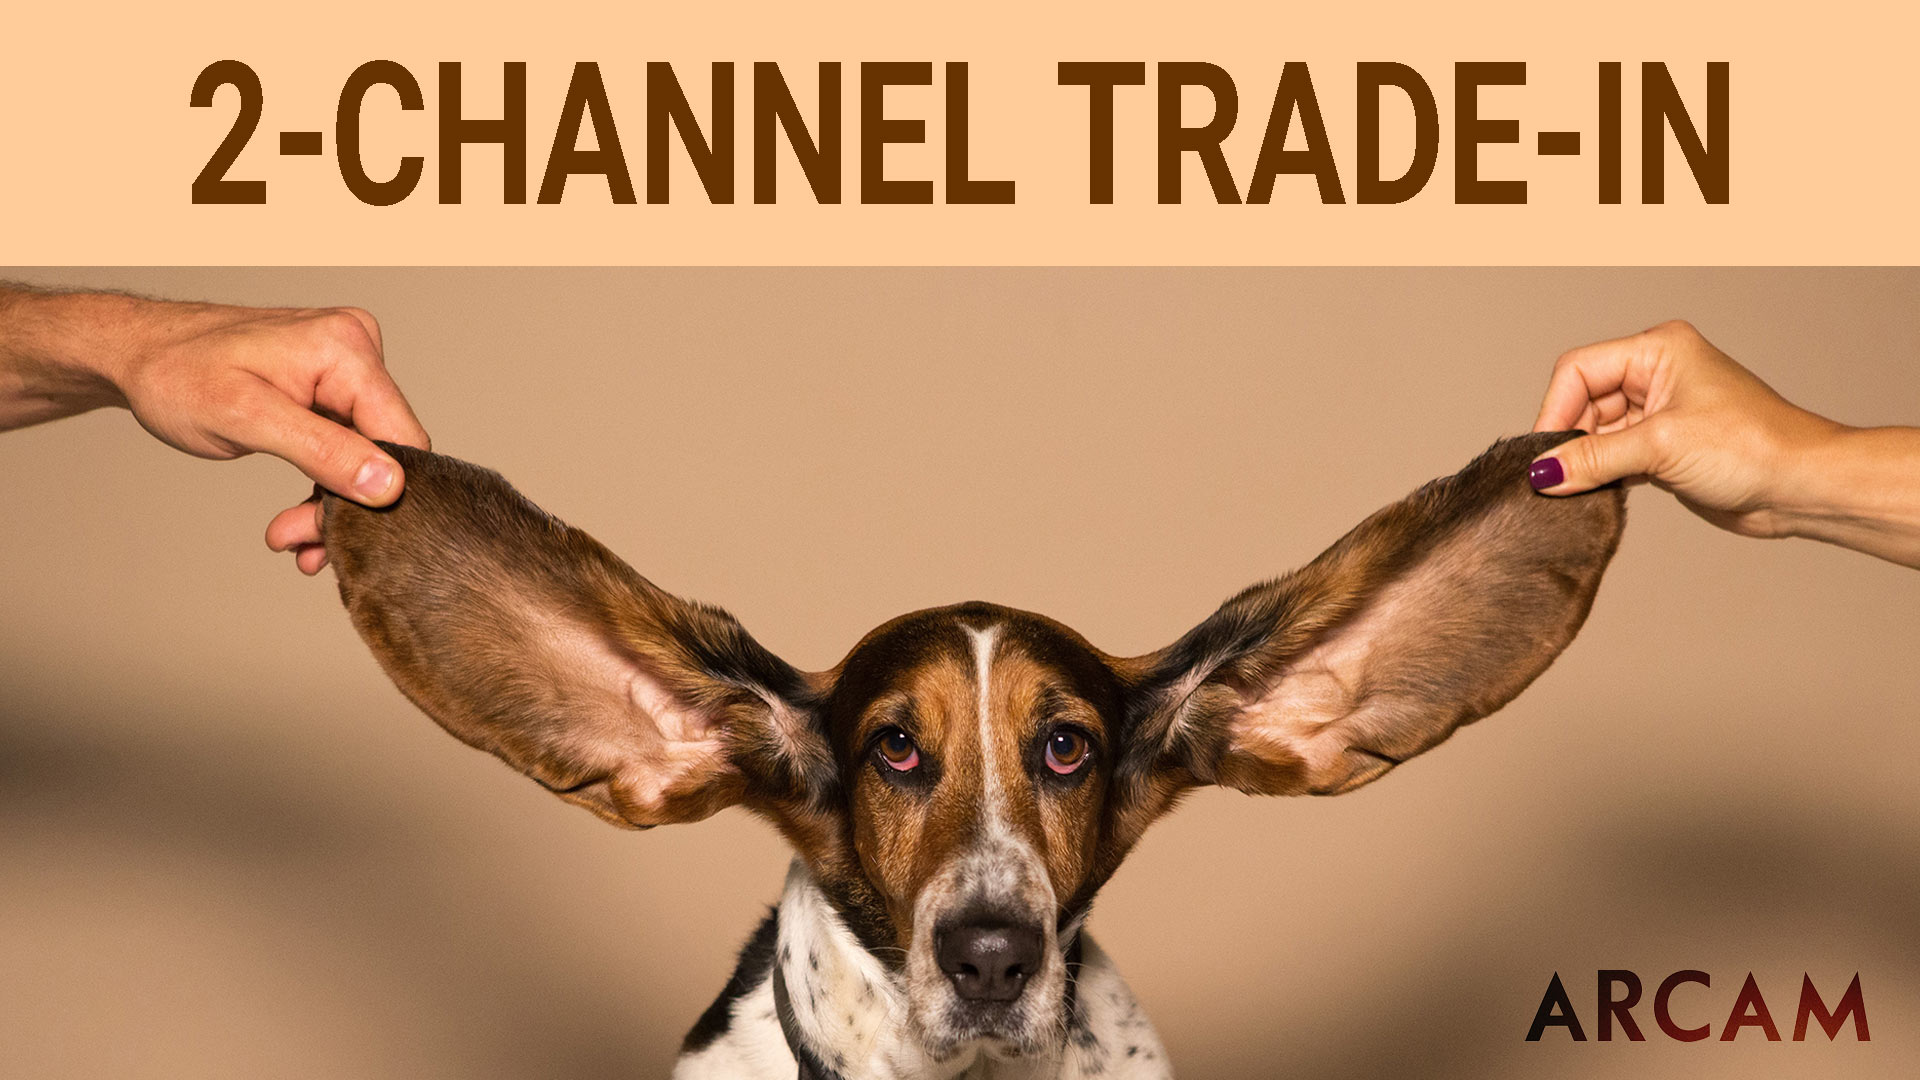 Arcam 2-Channel Trade-In Offer | Unilet Sound & Vision